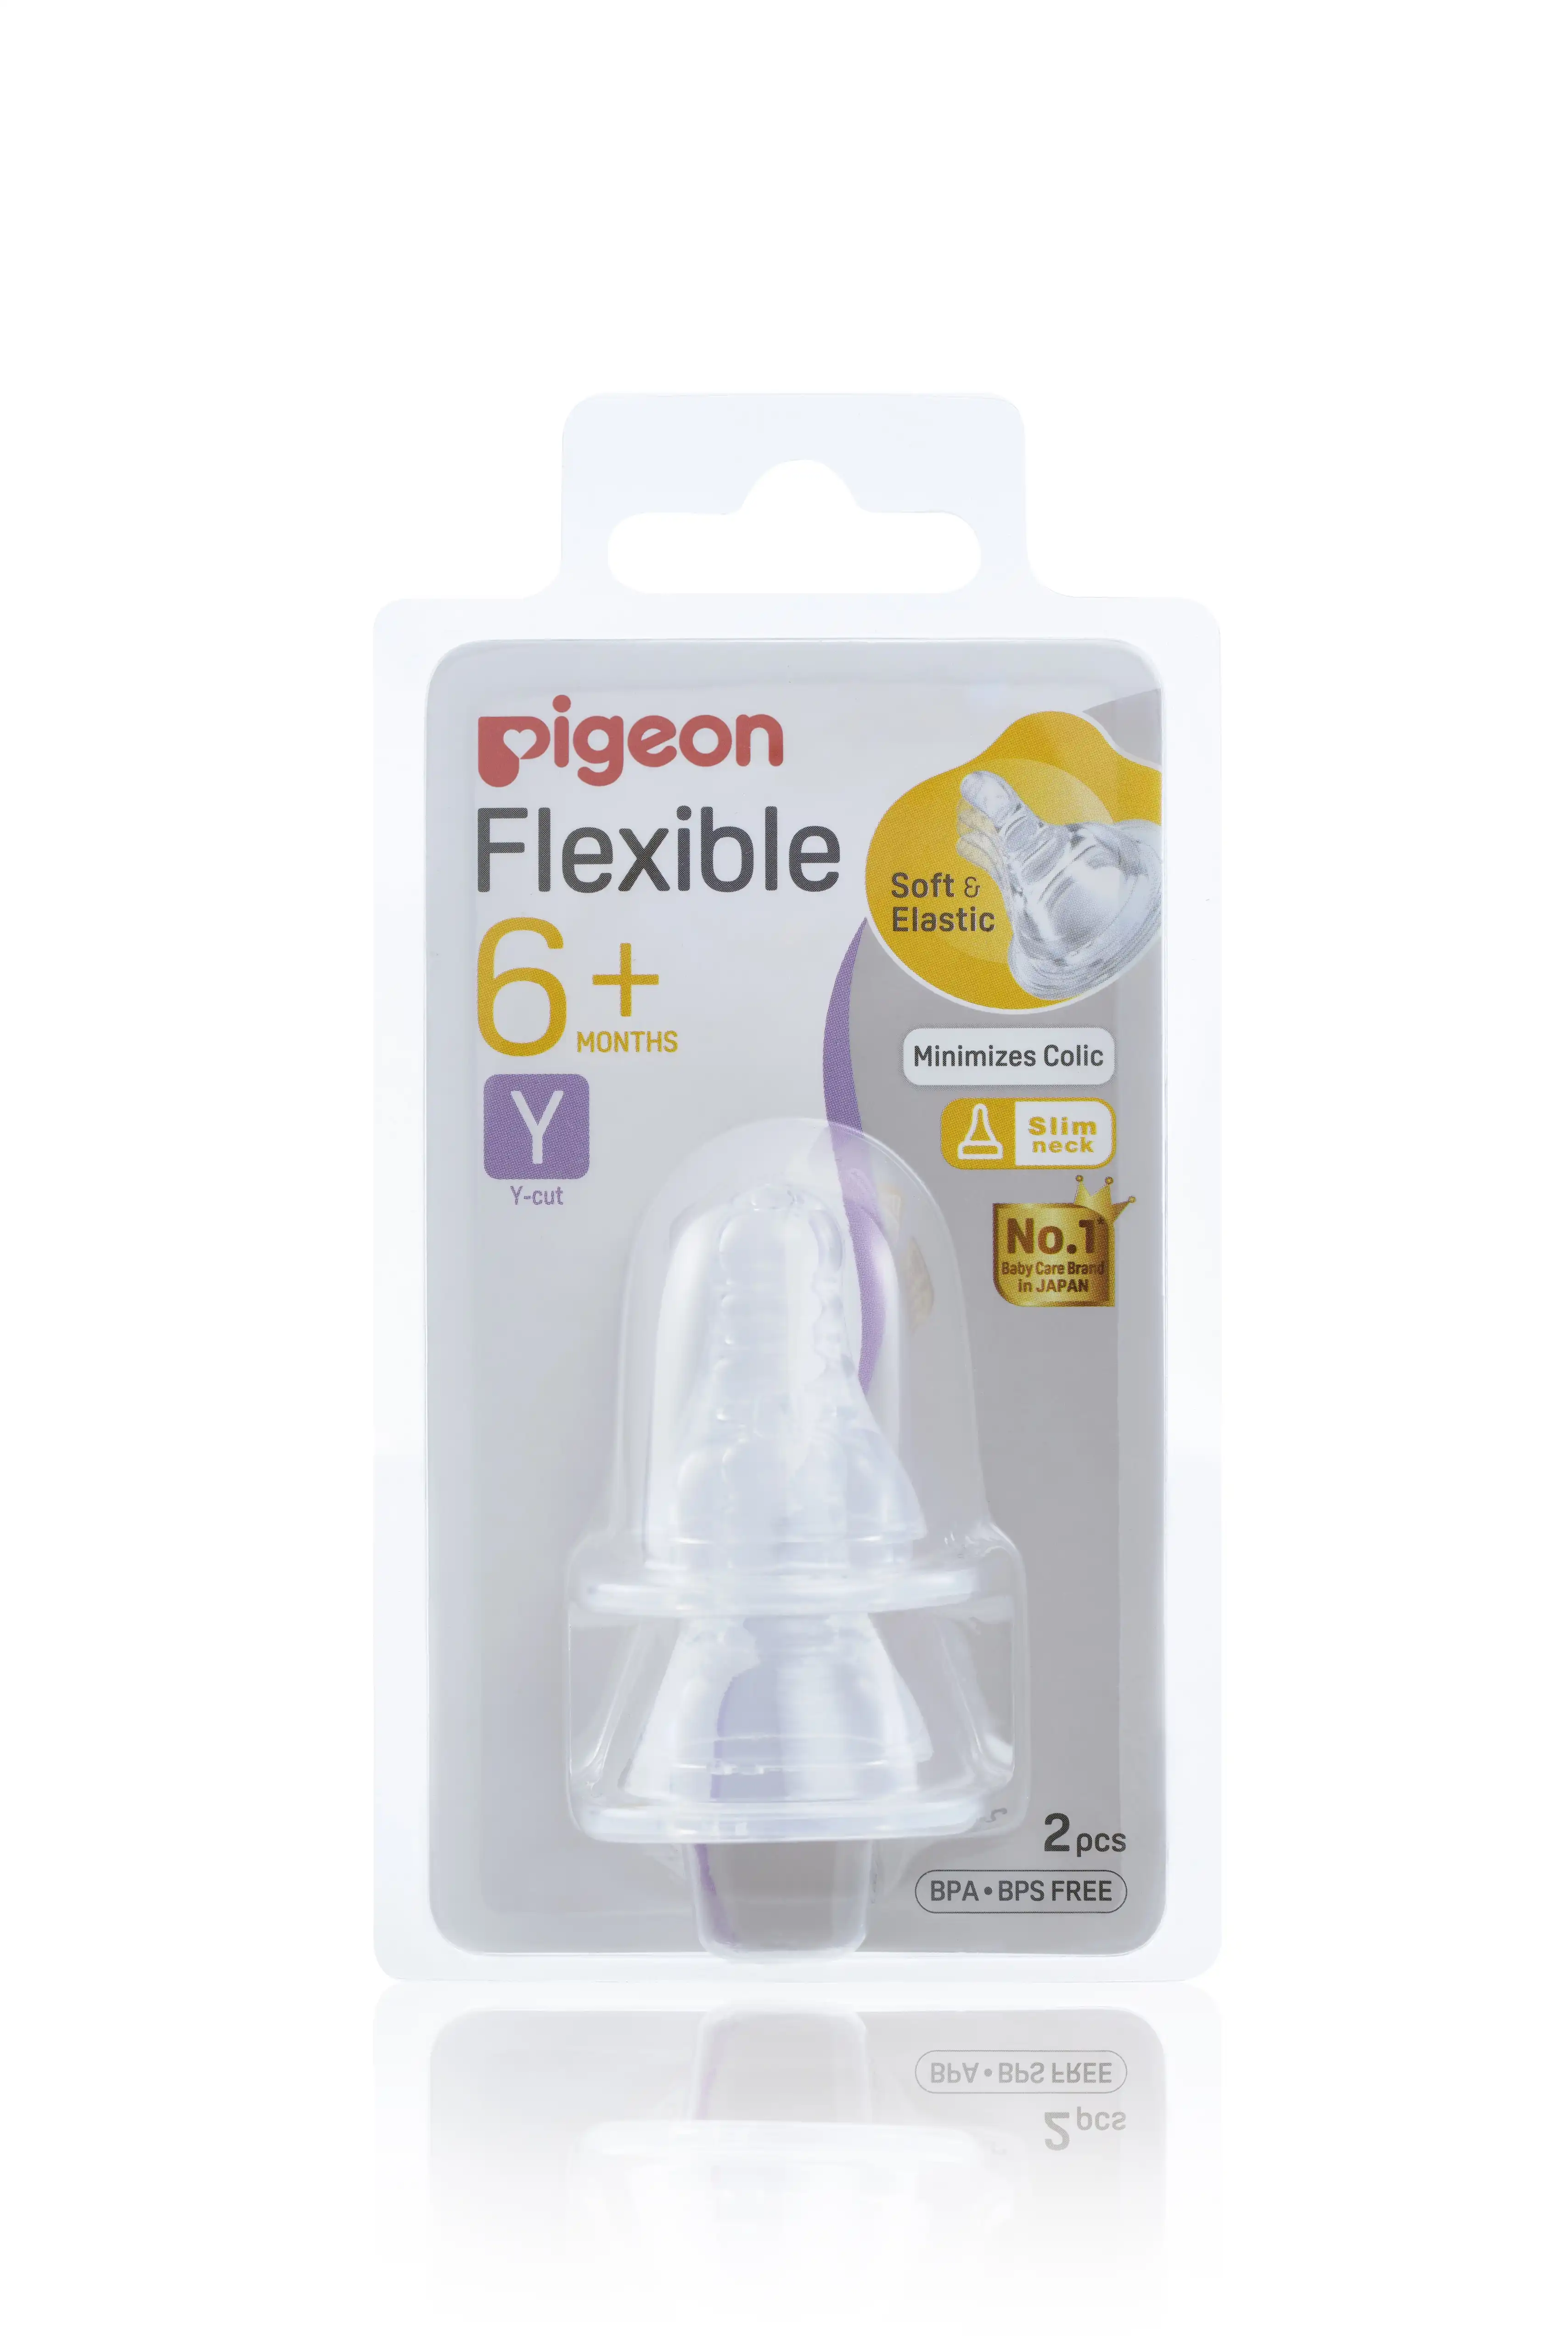 PIGEON Flexible Peristaltic Teat Y 2pcs